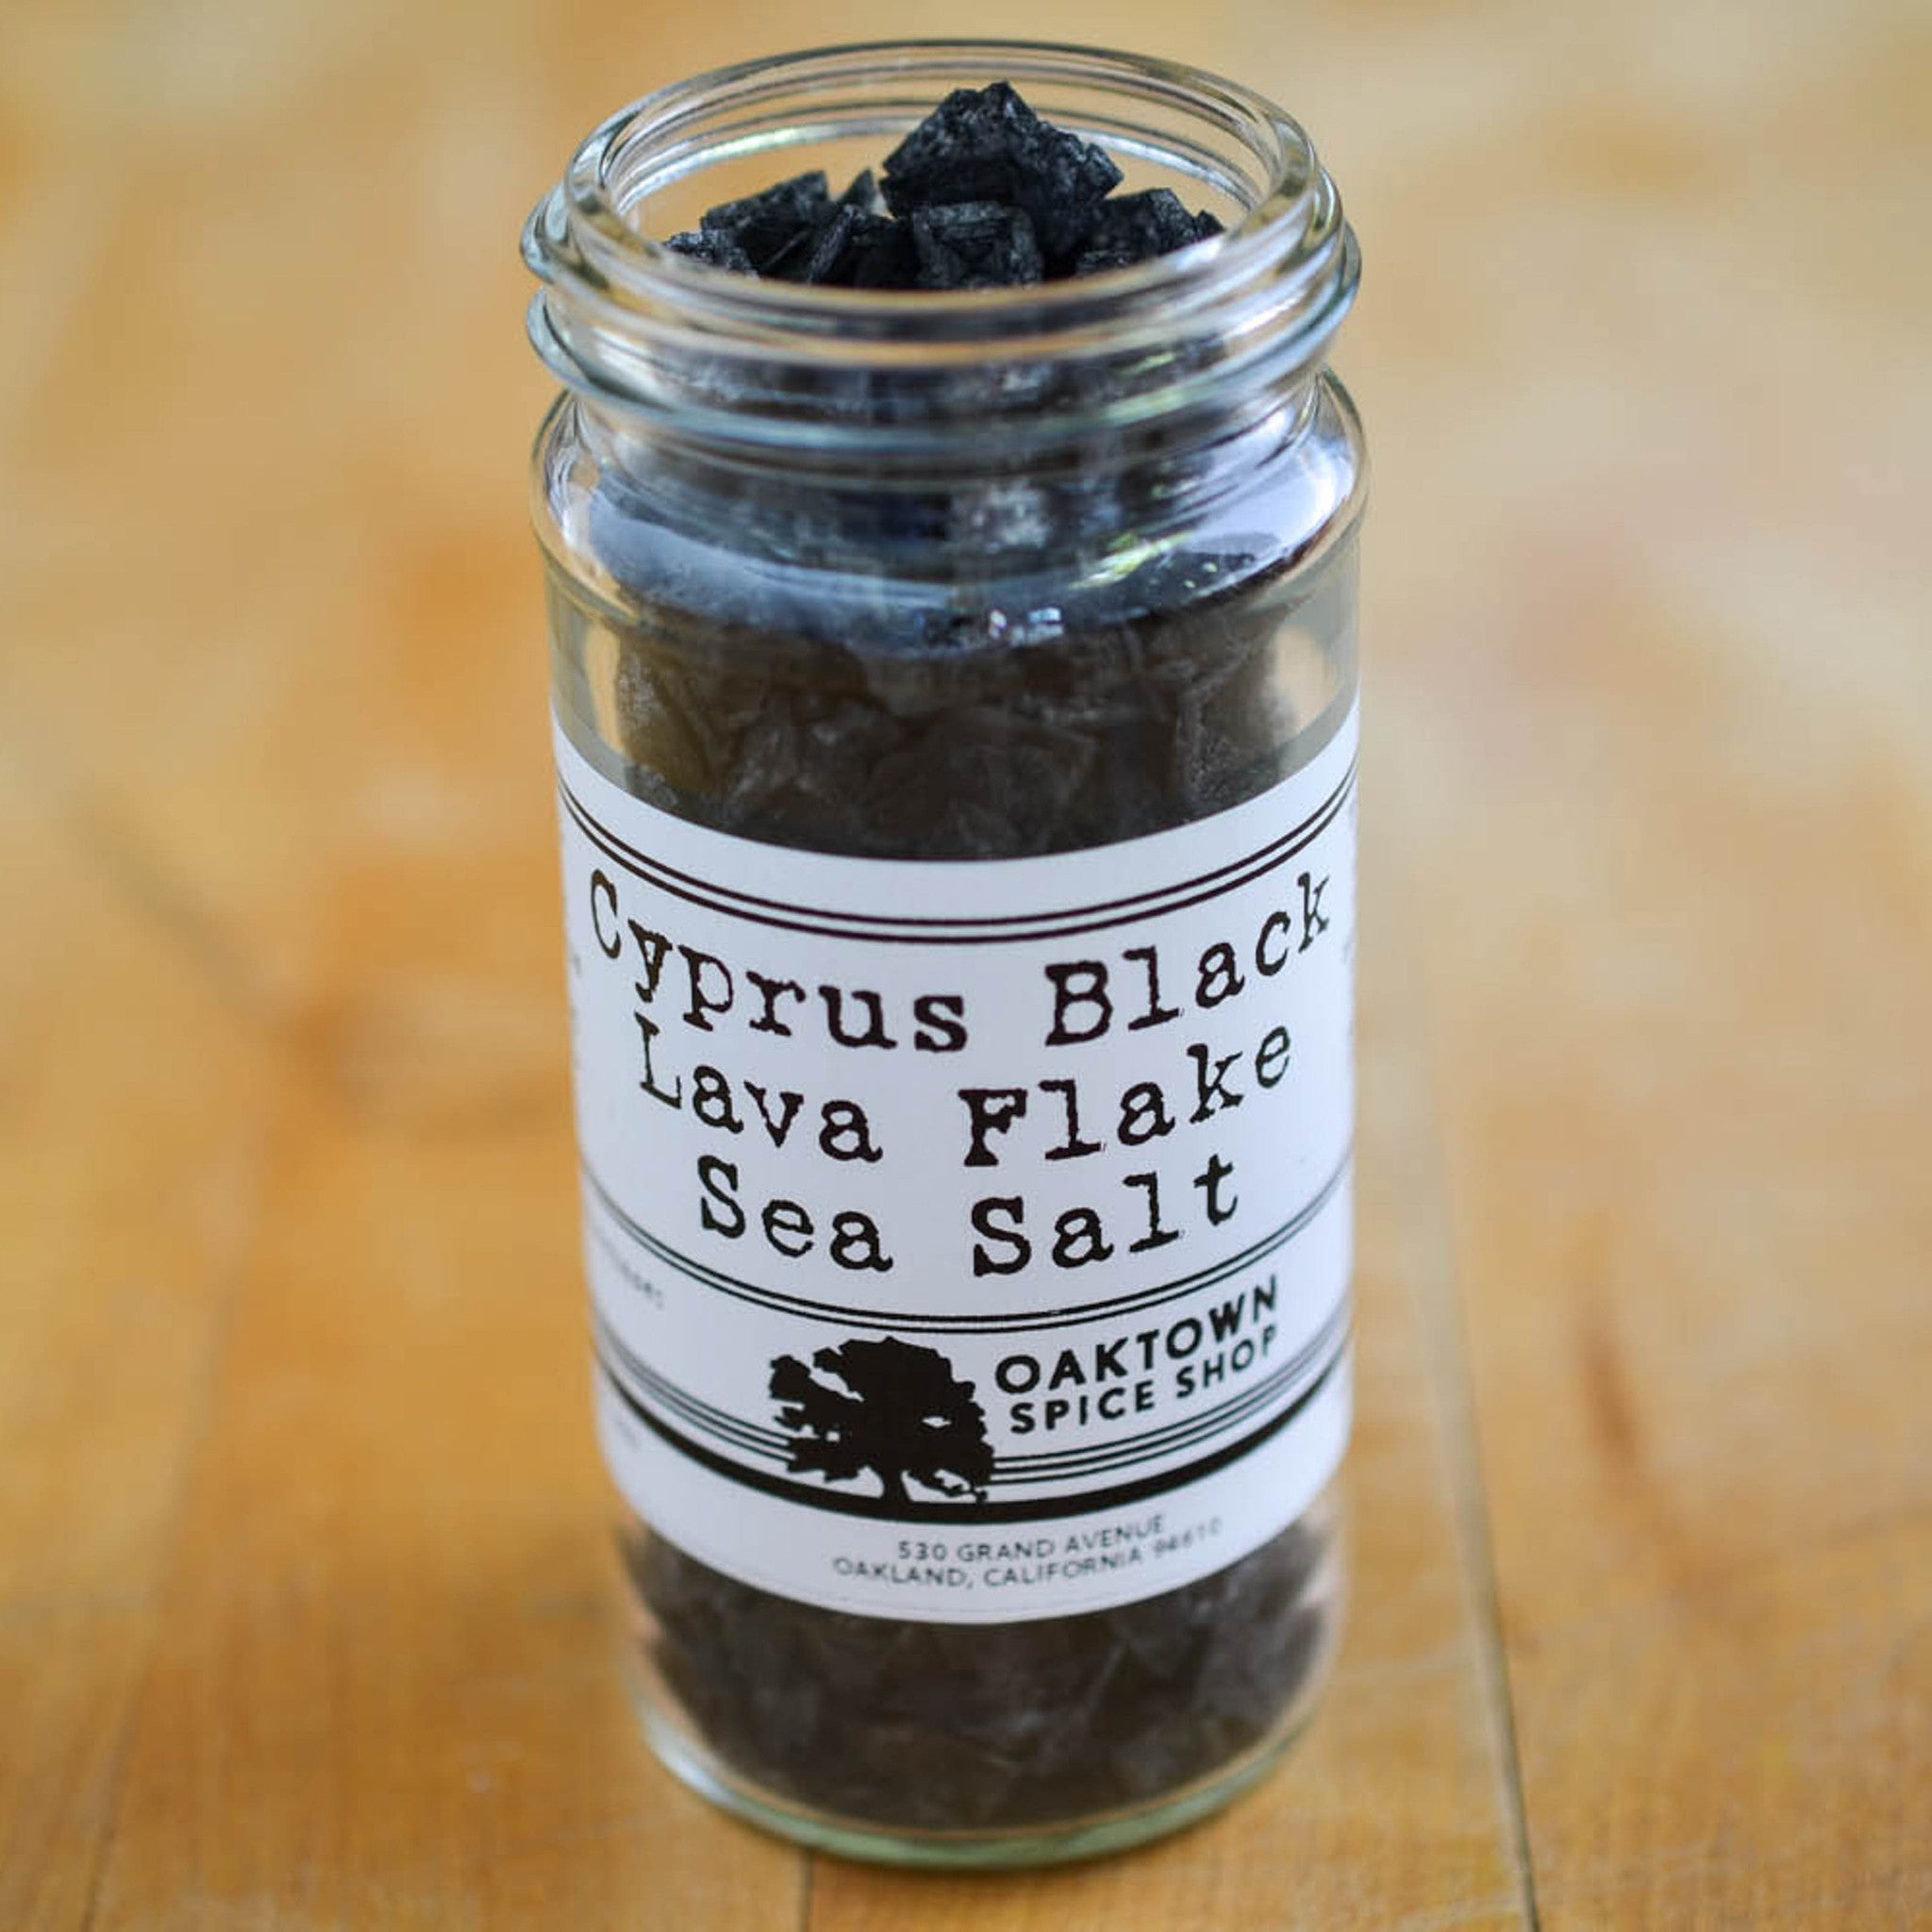 Sea Salt & Malt Vinegar Seasoning - My Africa Caribbean